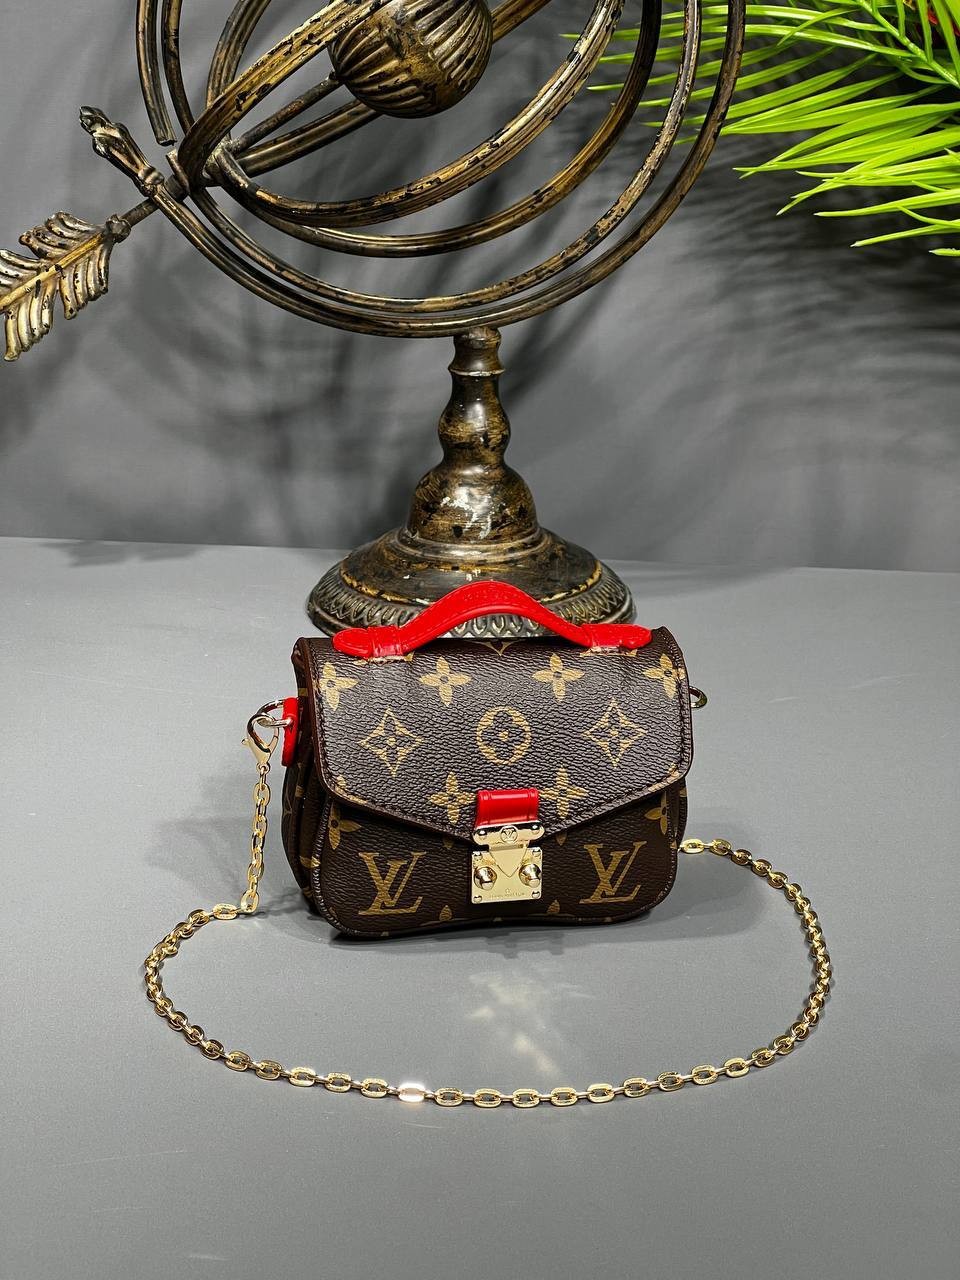 L Luxury New Season Bag